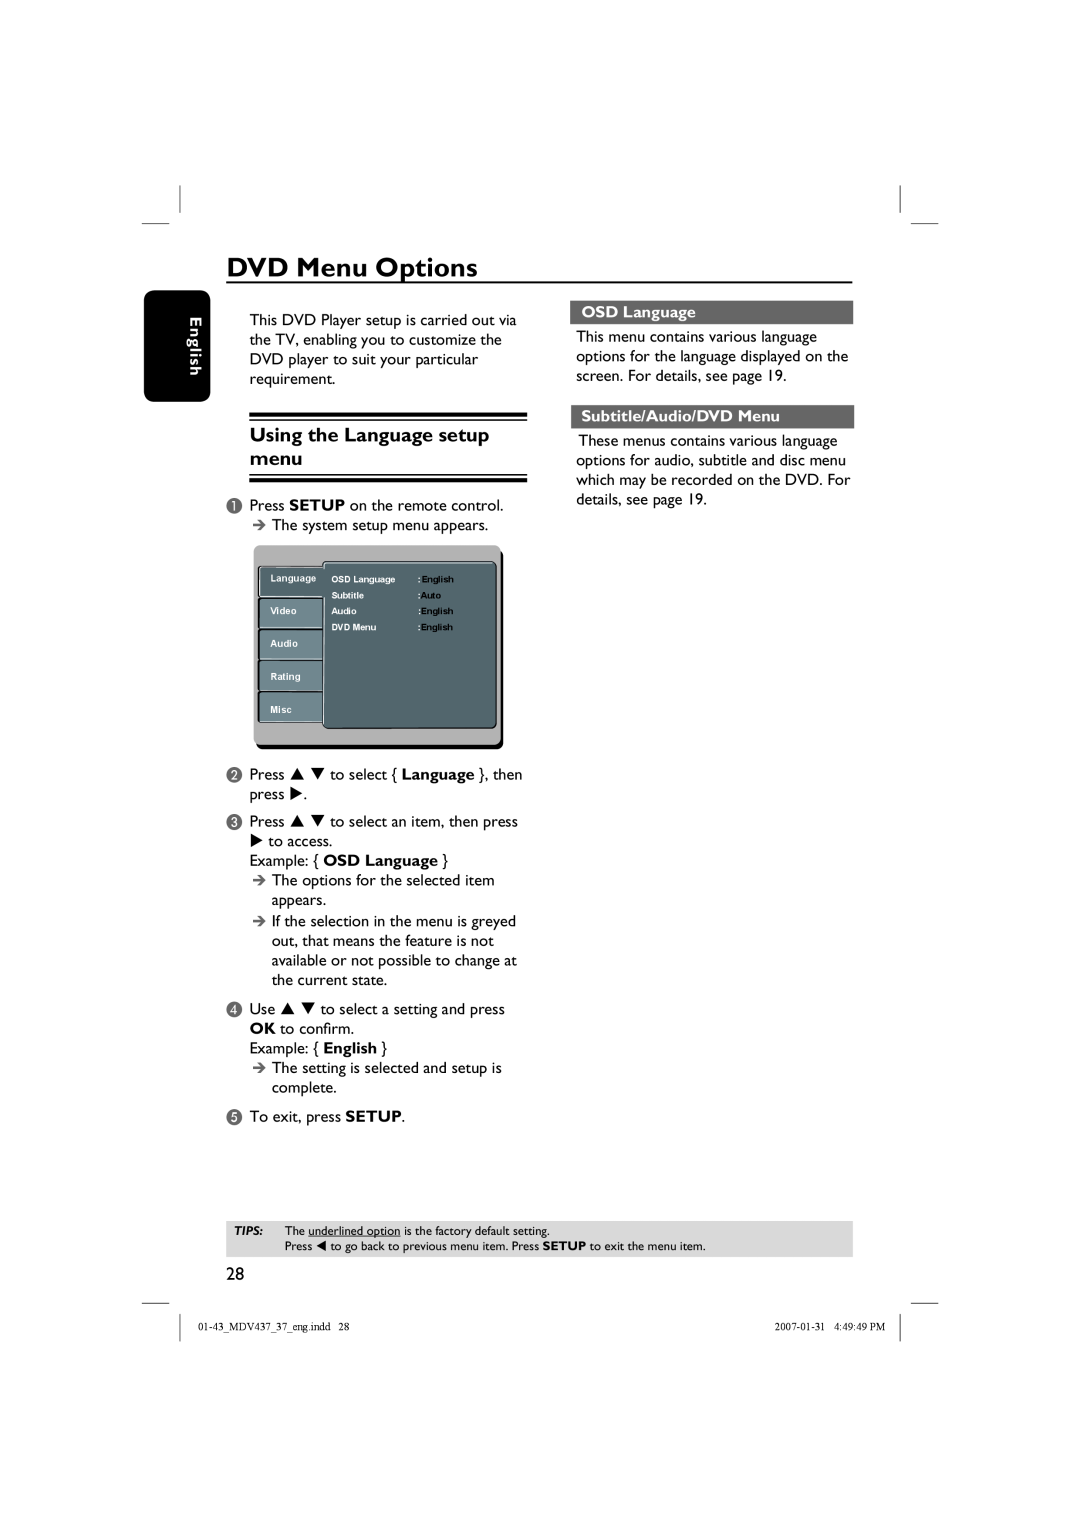 Magnavox MDV437 manual DVD Menu Options, Using the Language setup menu, OSD Language, Subtitle/Audio/DVD Menu, English 